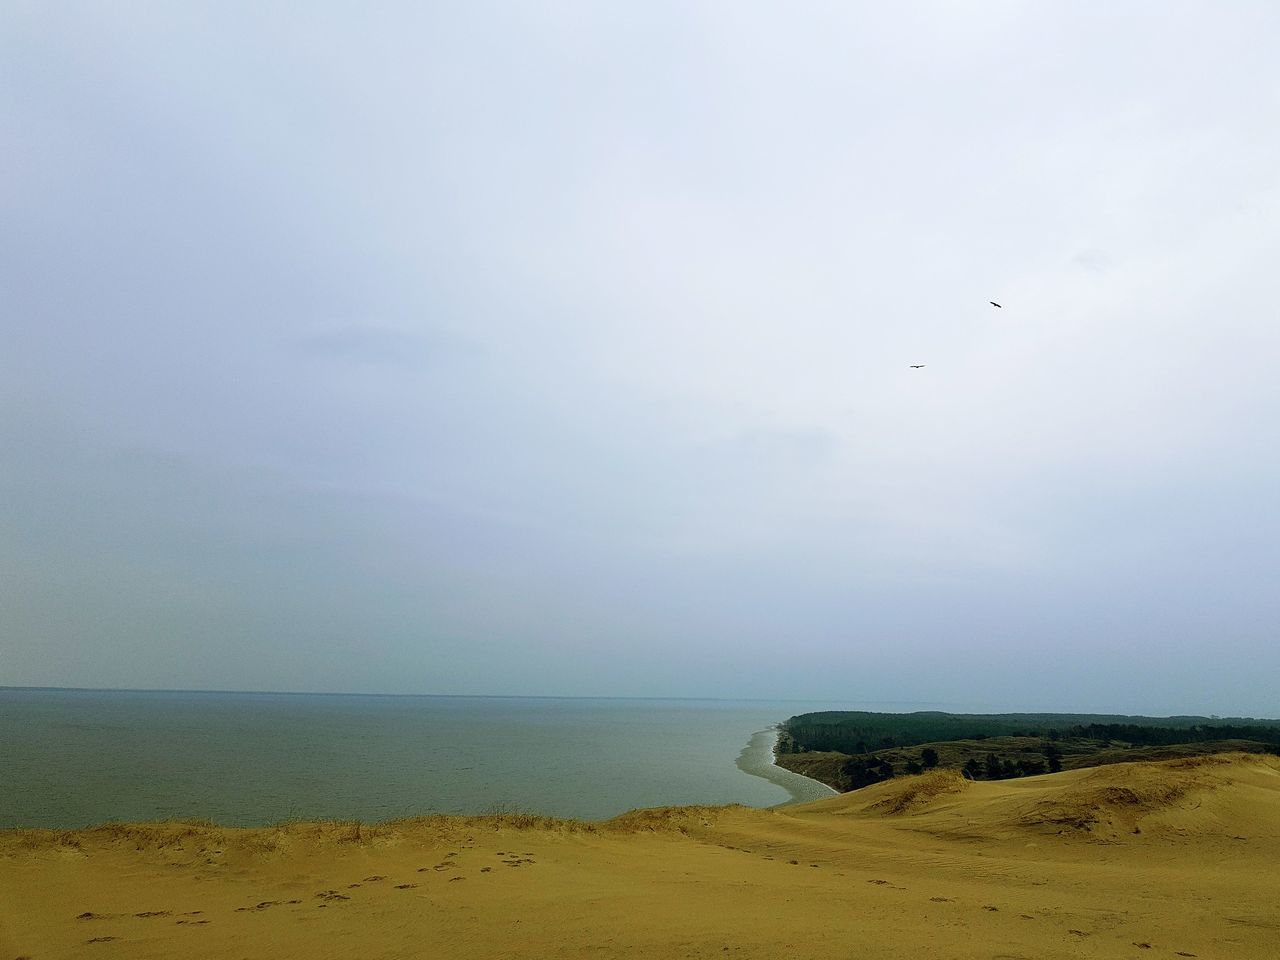 Grey dunes